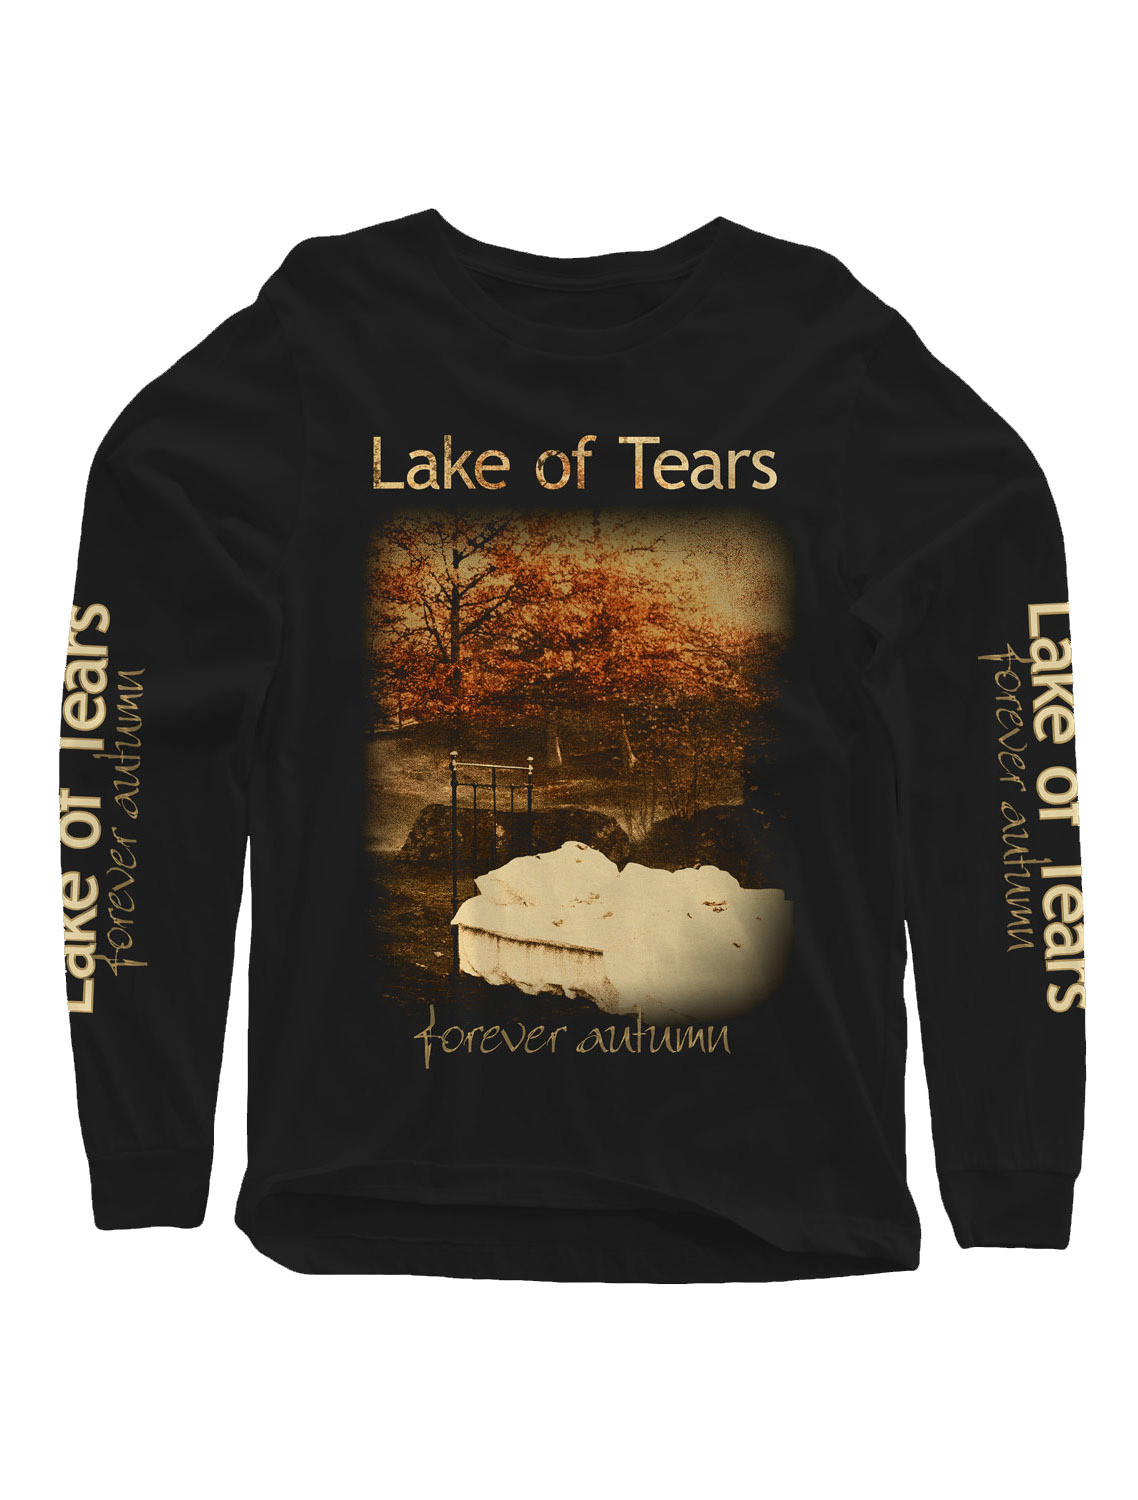 Forever autumn sweatshirt